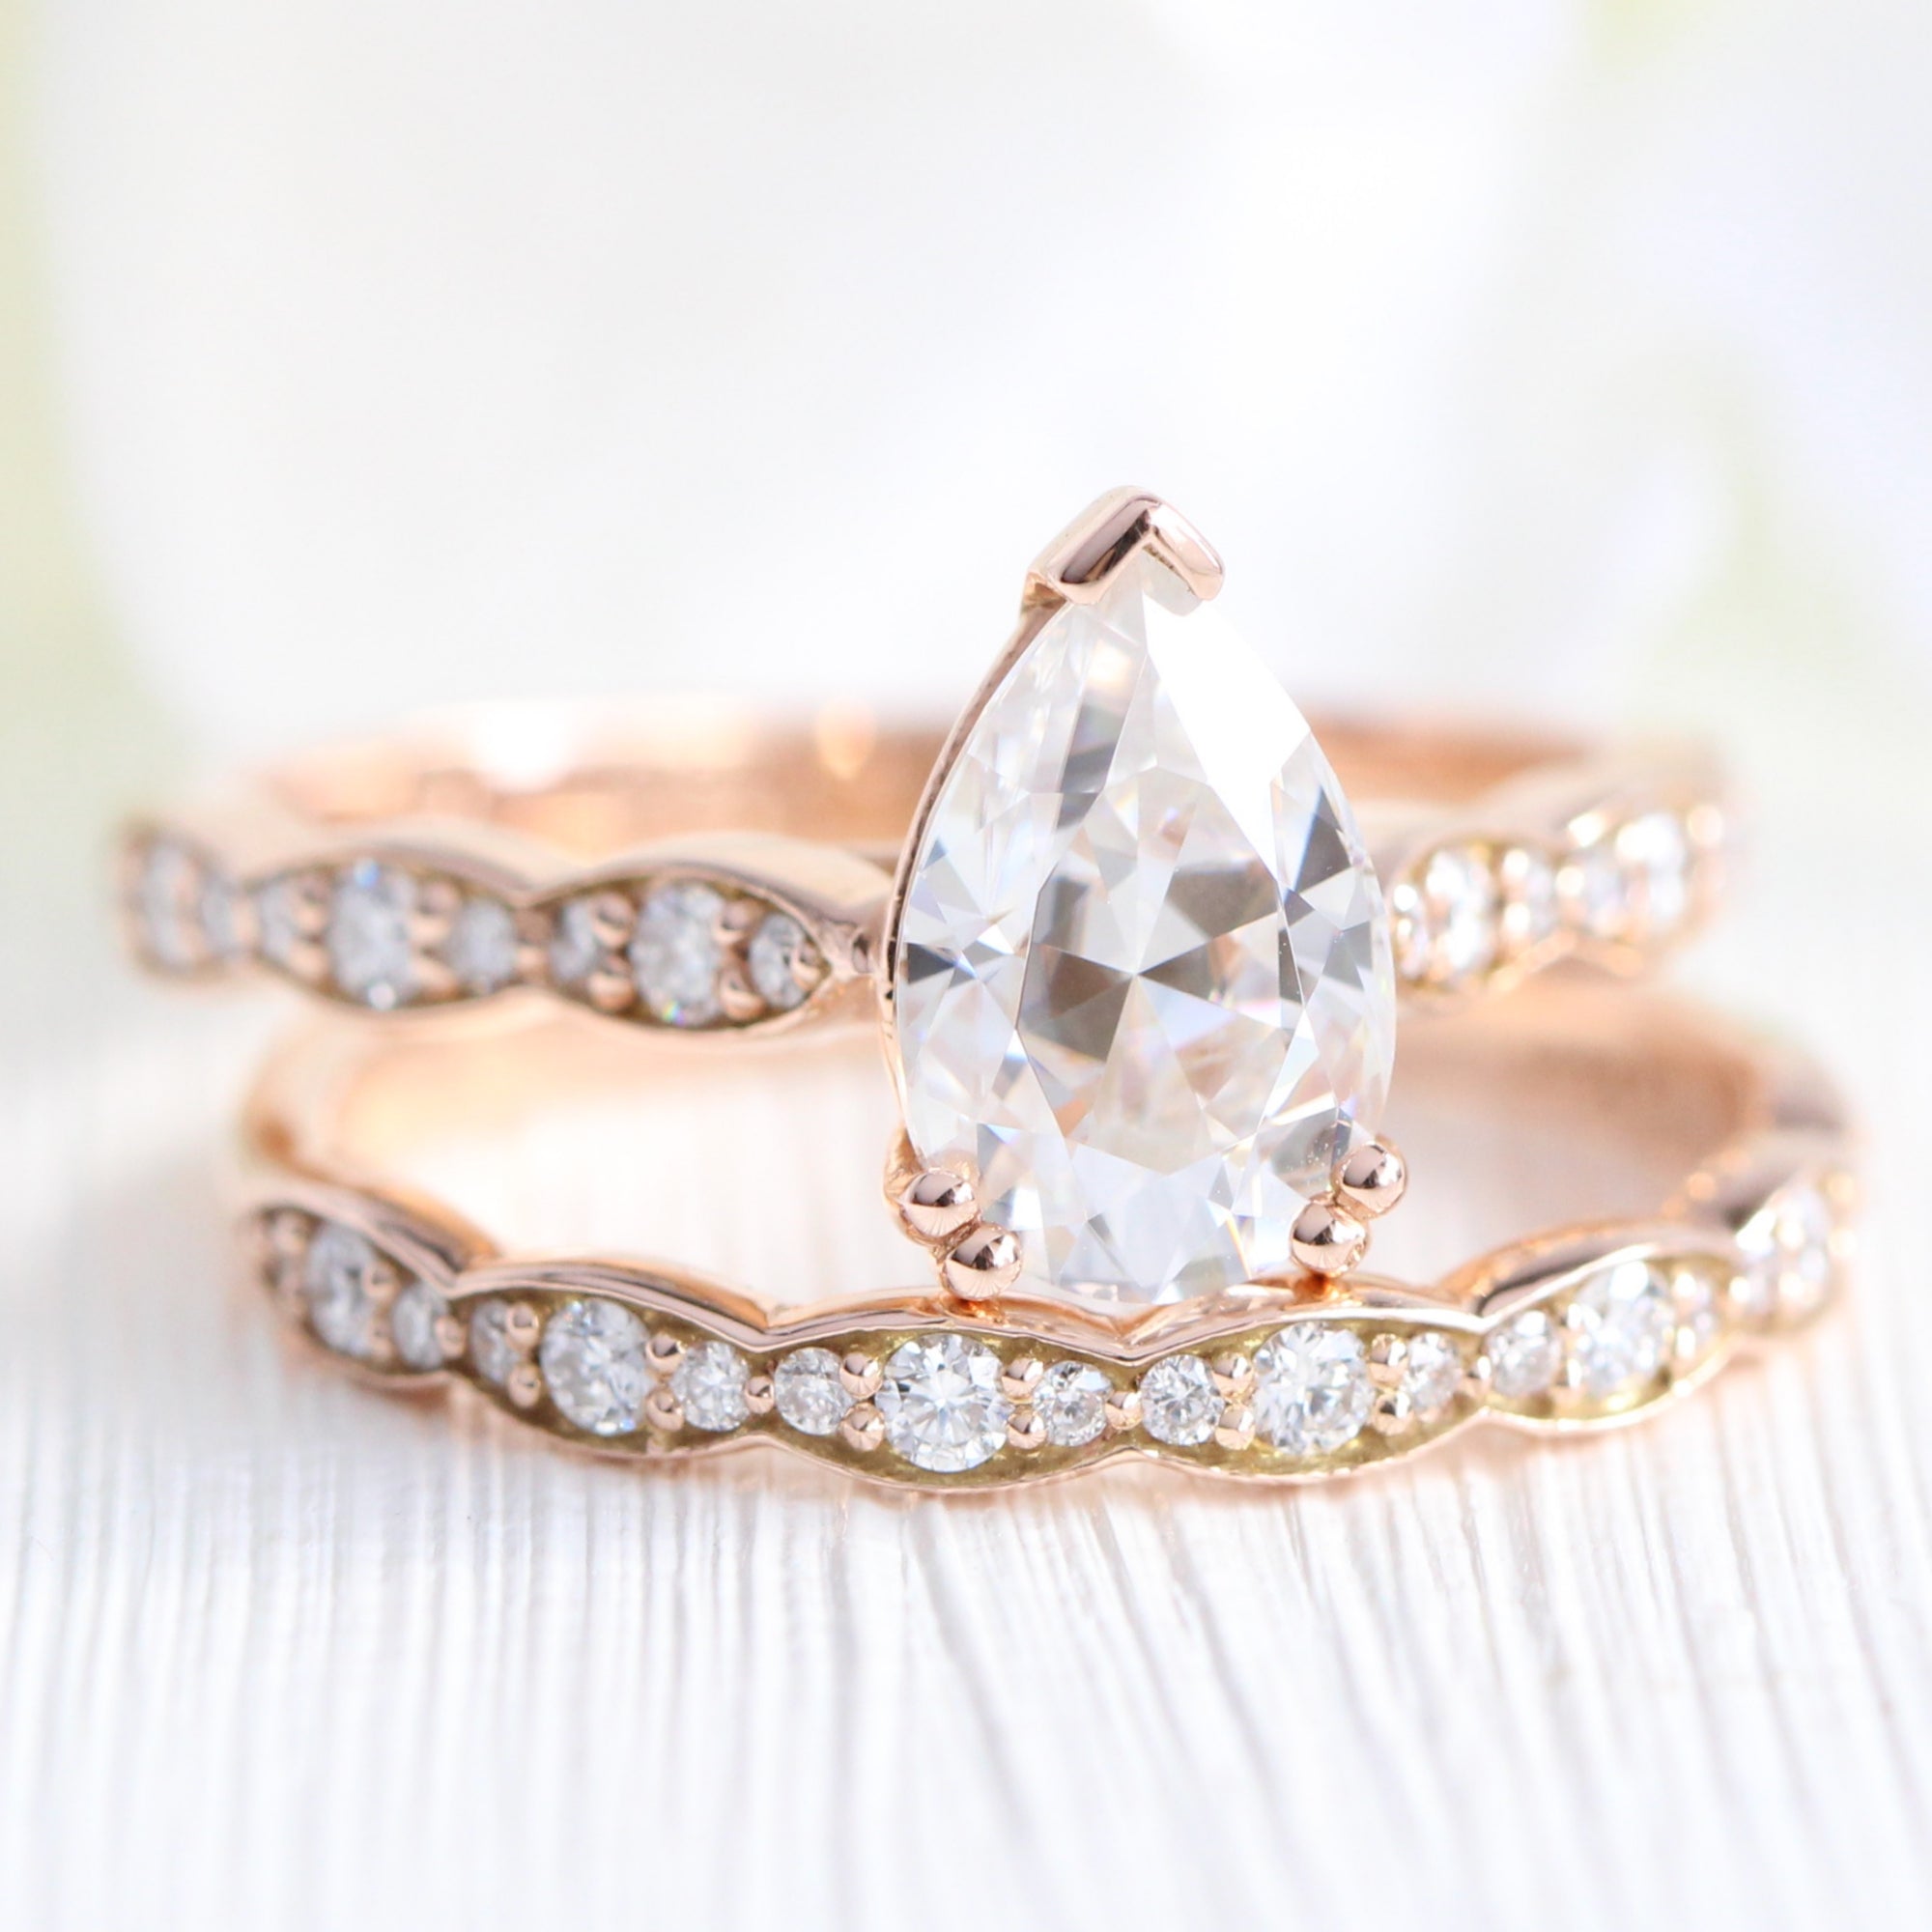 Pear moissanite diamond solitaire ring rose gold matching diamond wedding band la more design jewelry